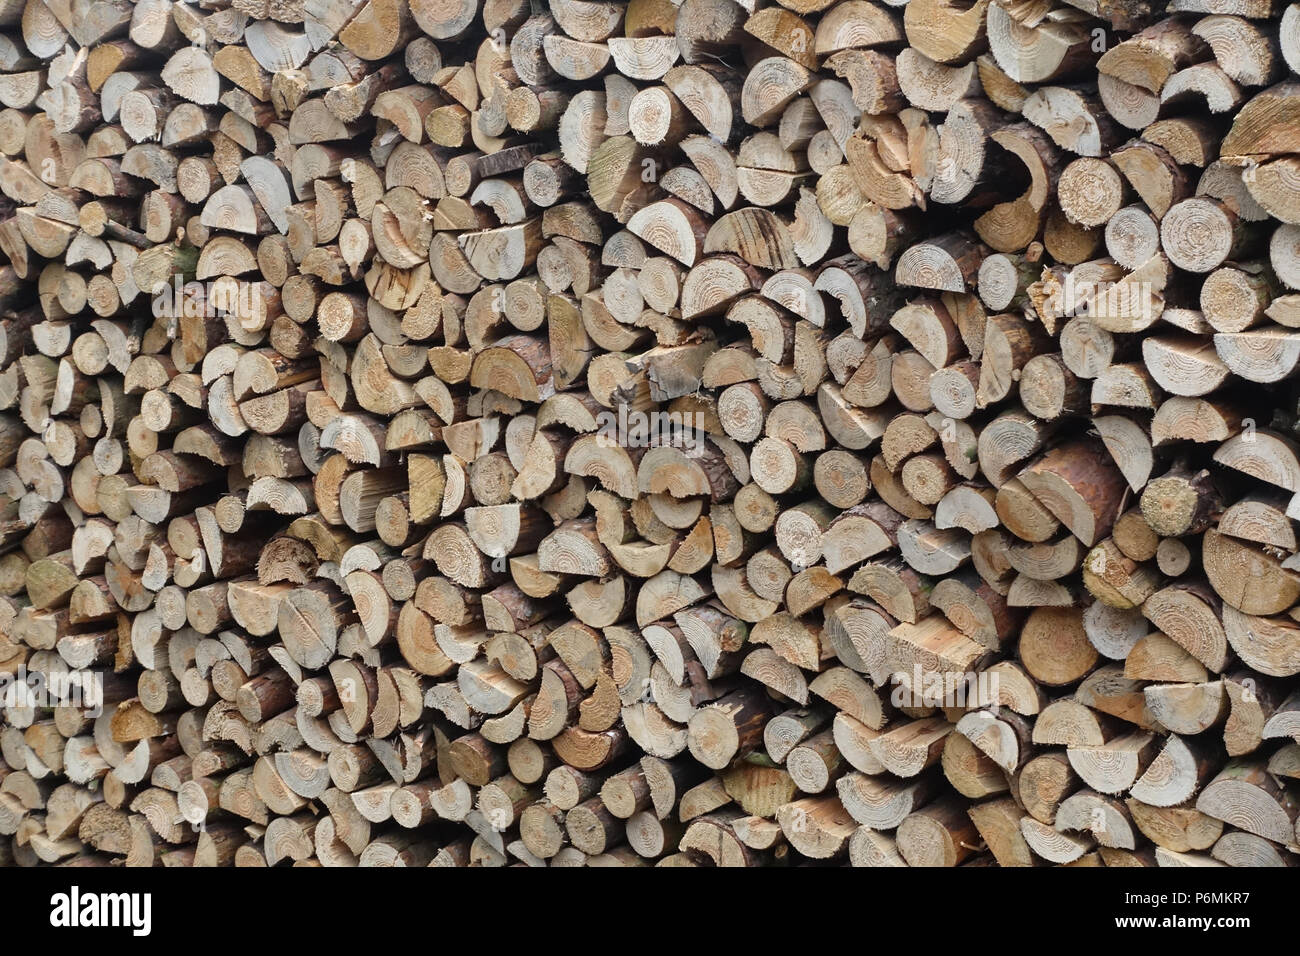 Berlin, Germany - firewood stack Stock Photo